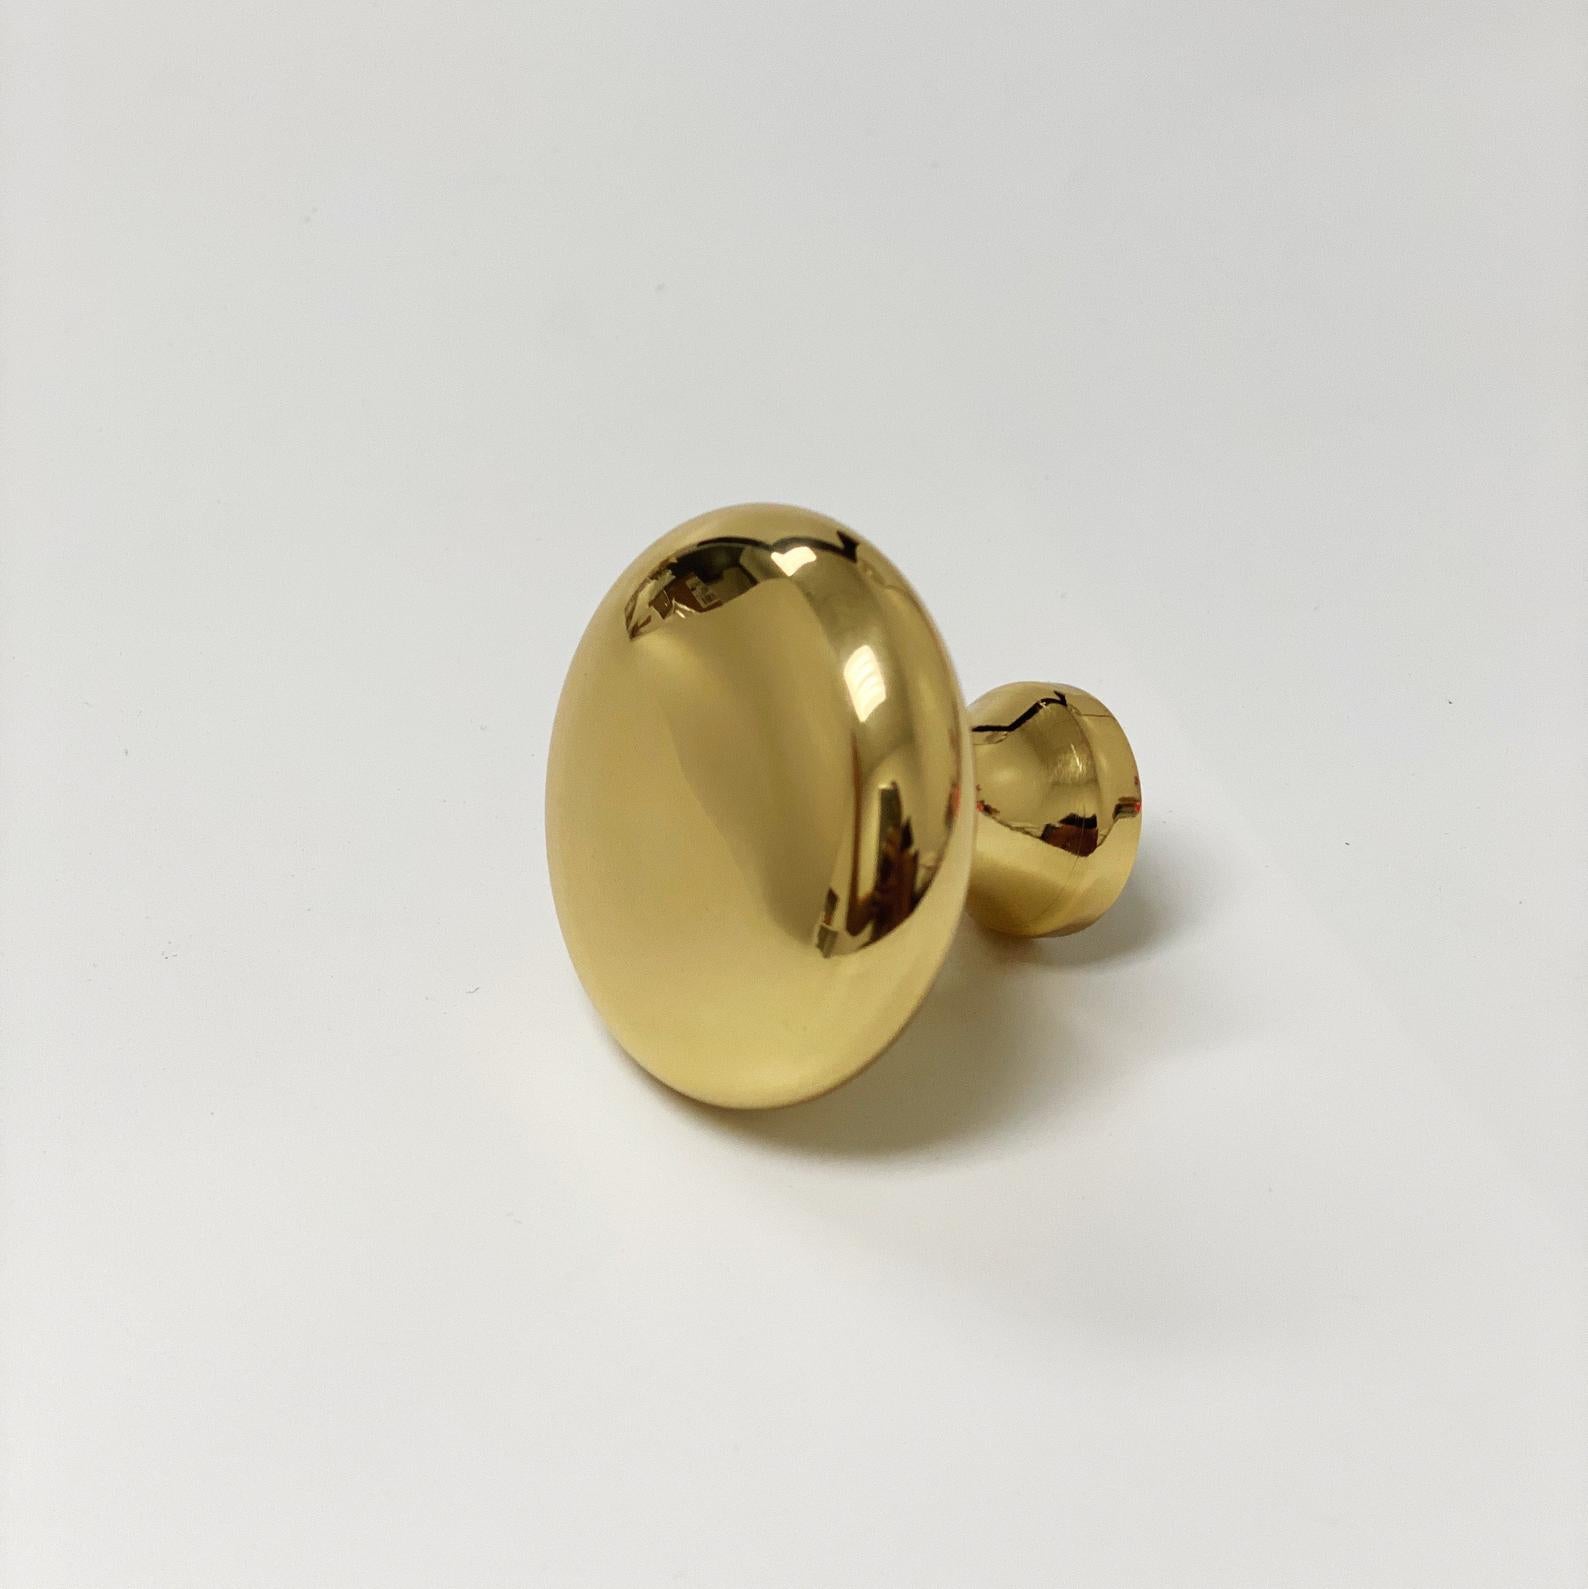 Cravat Polished Unlacquered Brass Knob 1.25